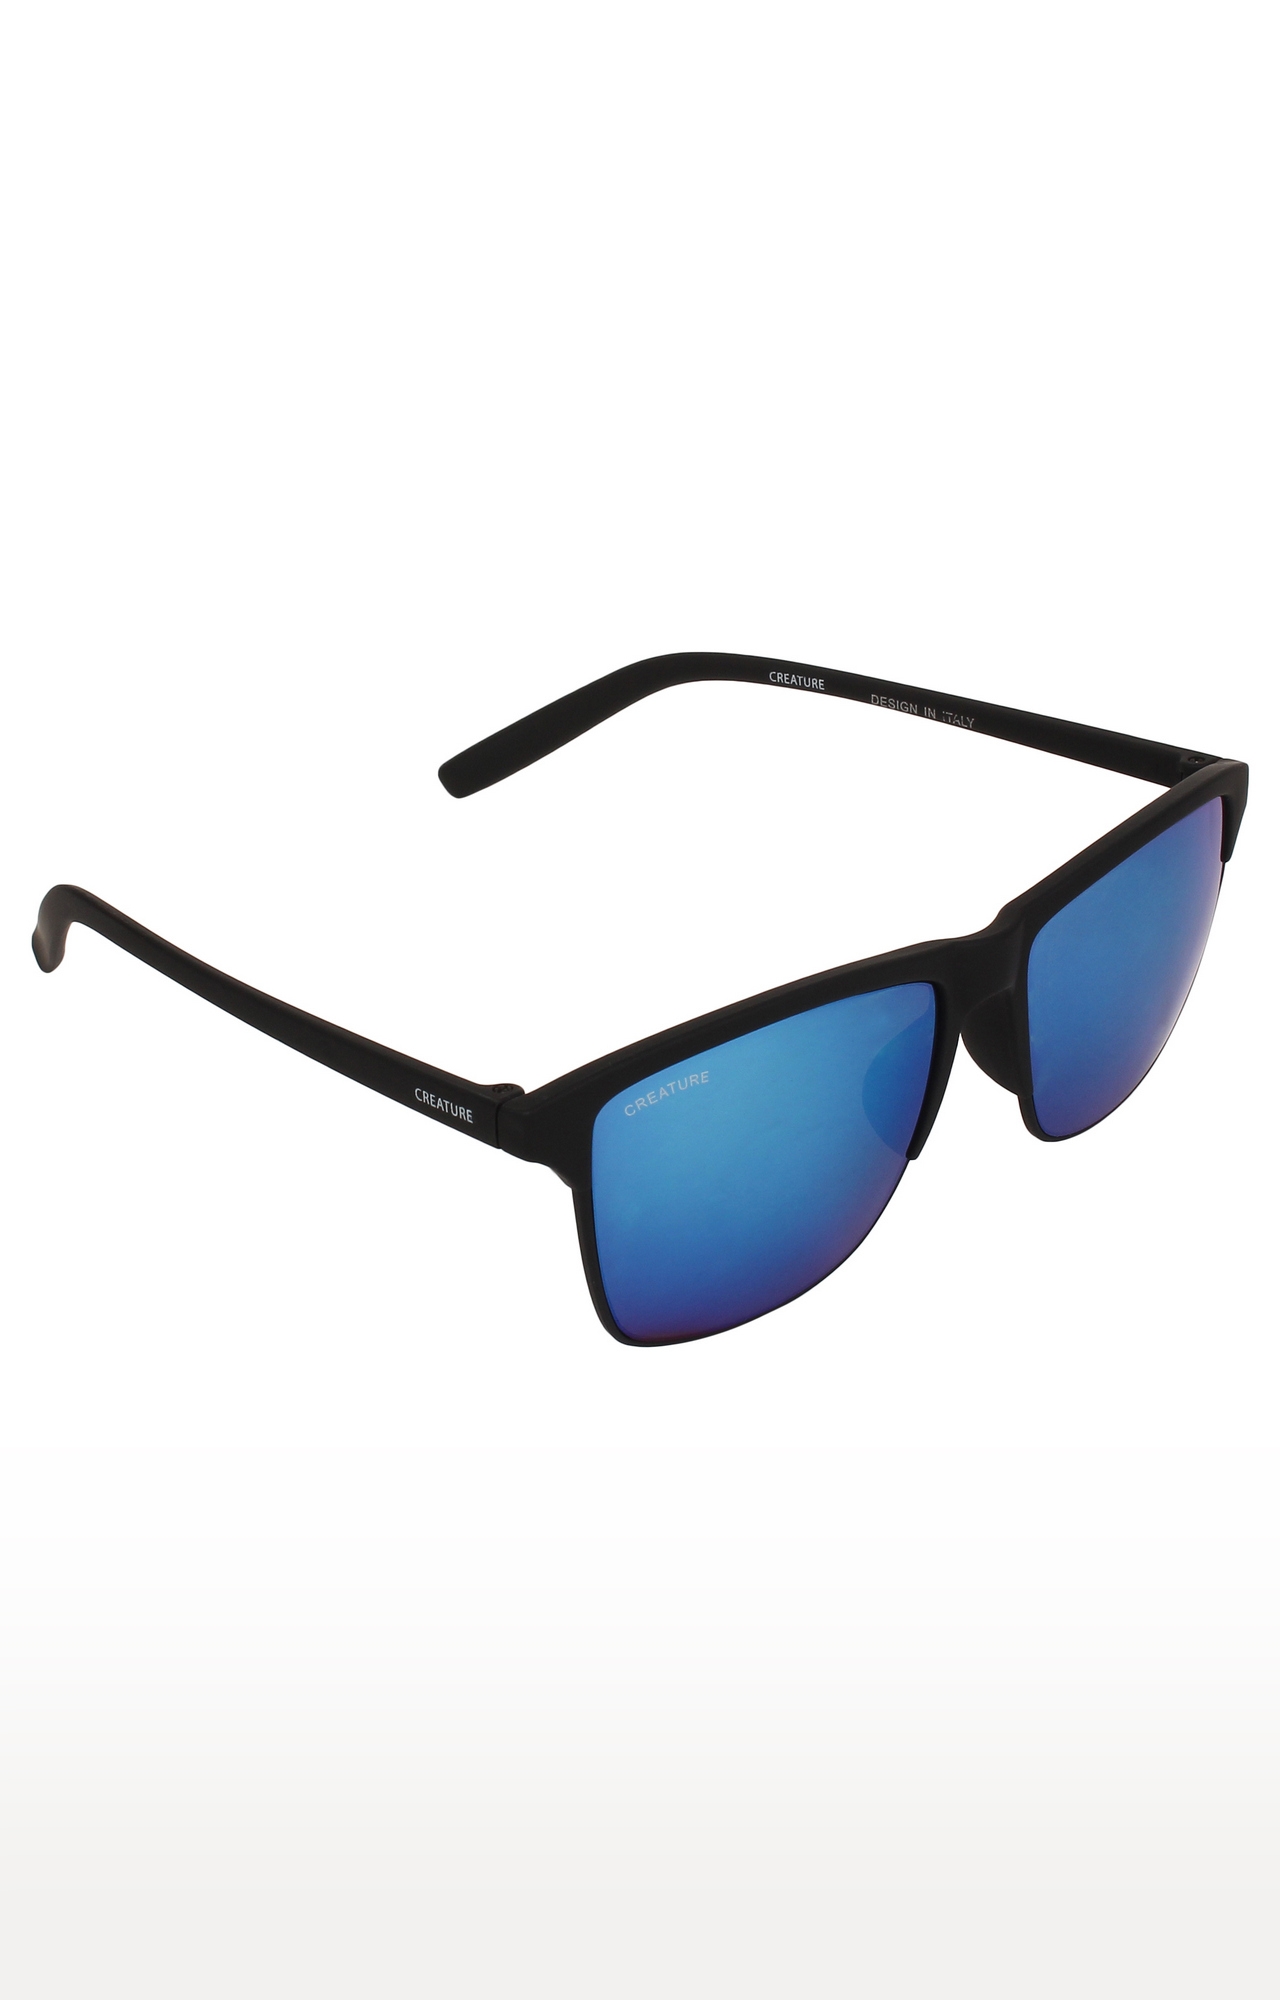 CREATURE | CREATURE Black Sunglasses with UV Protection (Lens-Purple & Blue|Frame-Black)